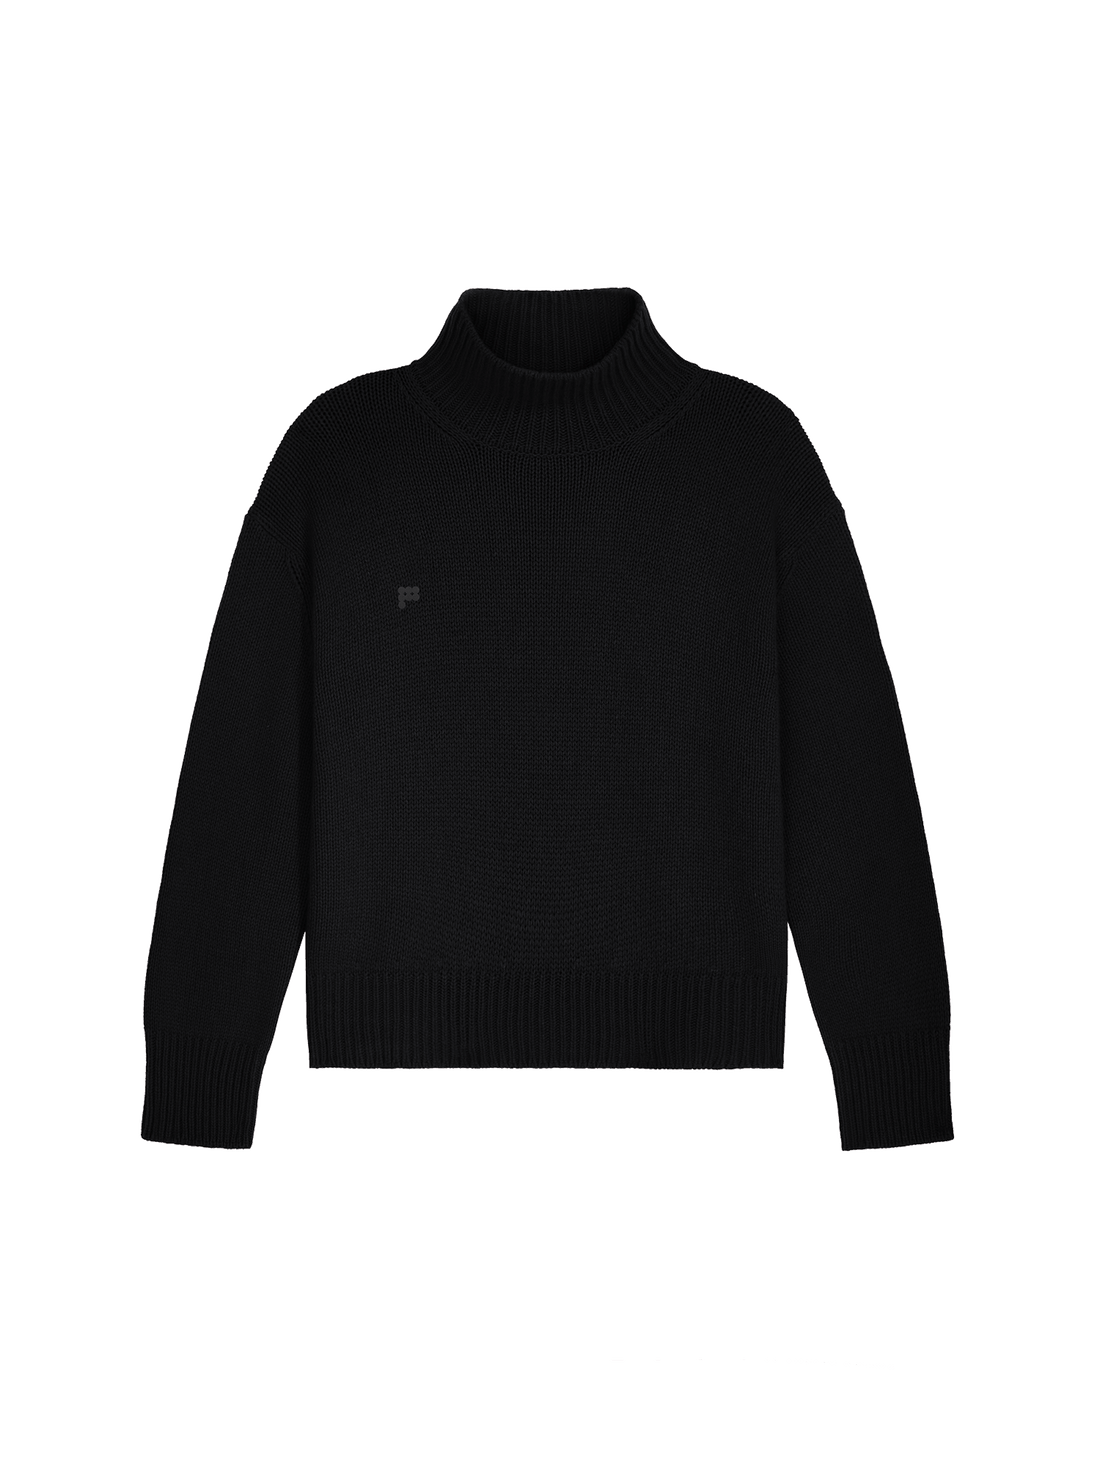 Women's Black Recycled Cashmere Turtleneck Sweater | Pangaia